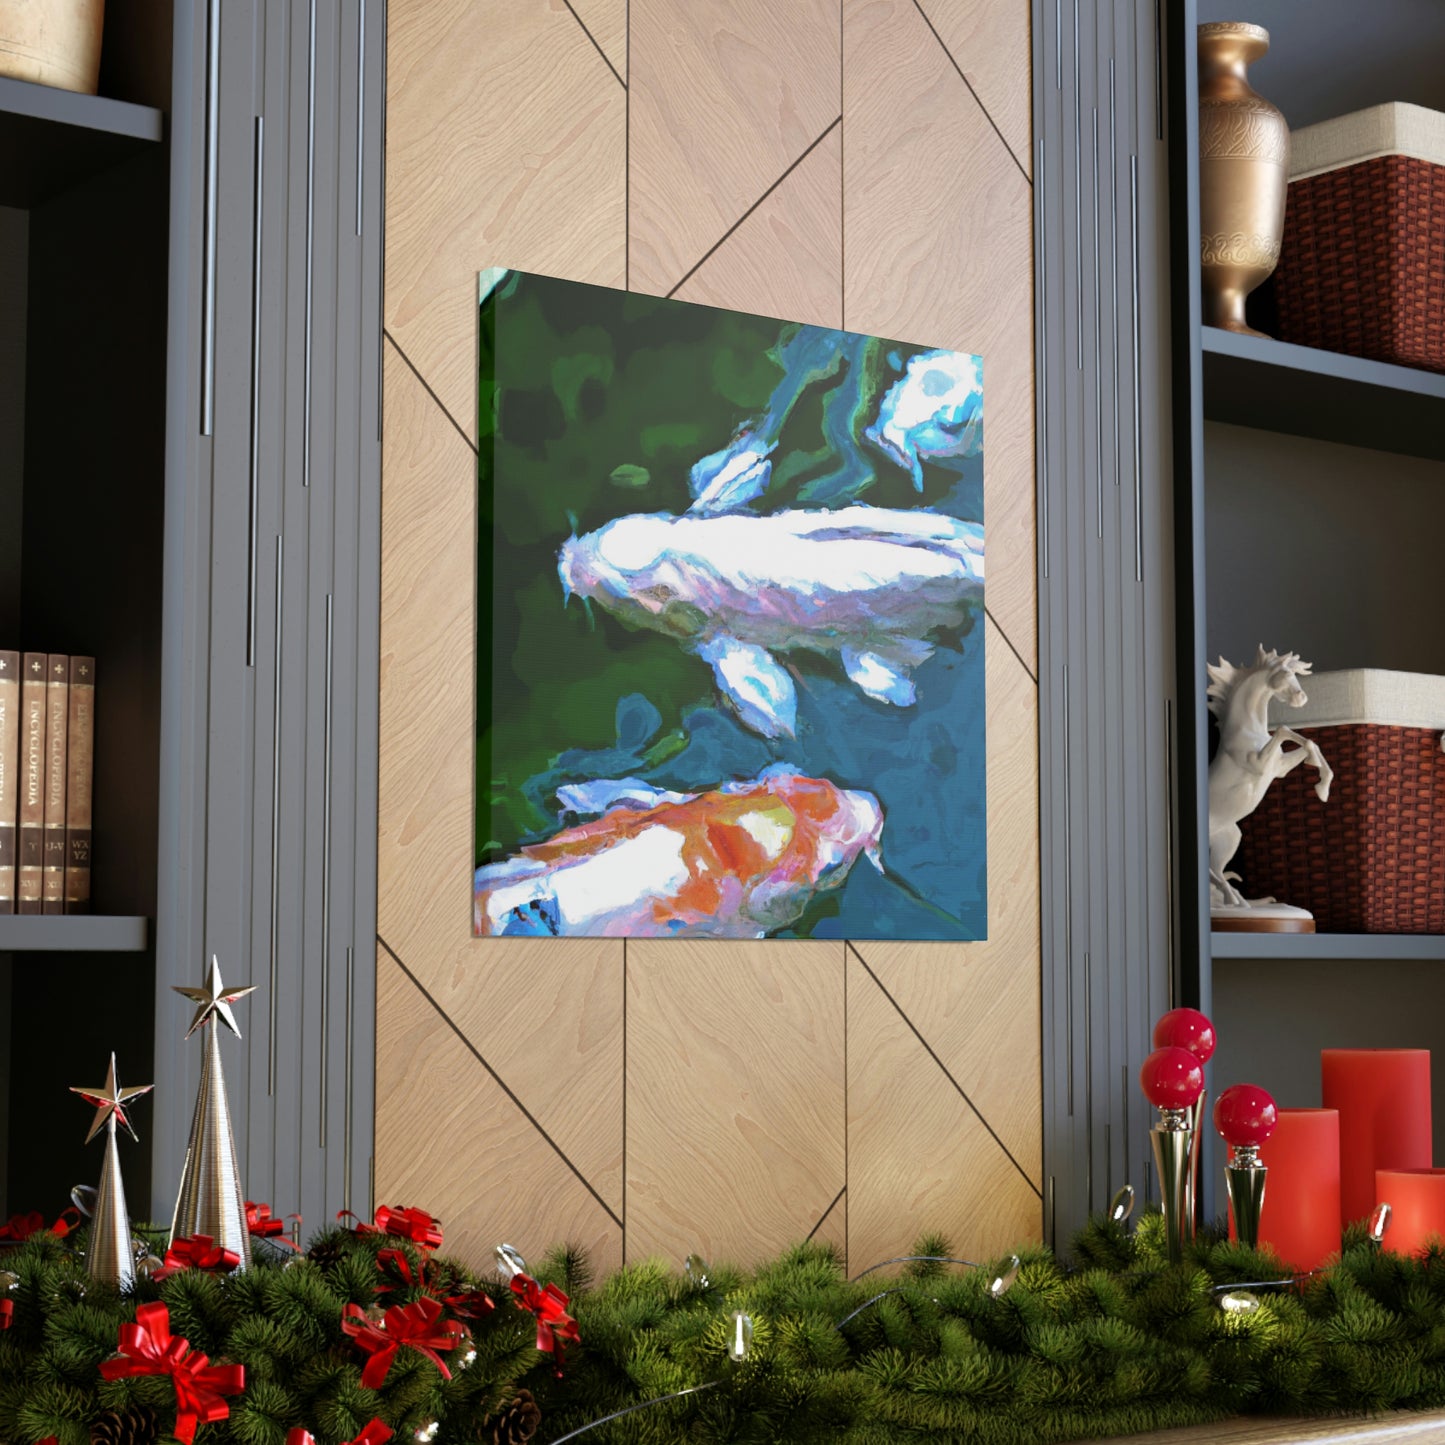 Minaeus - Koi Fish Canvas Wall Art